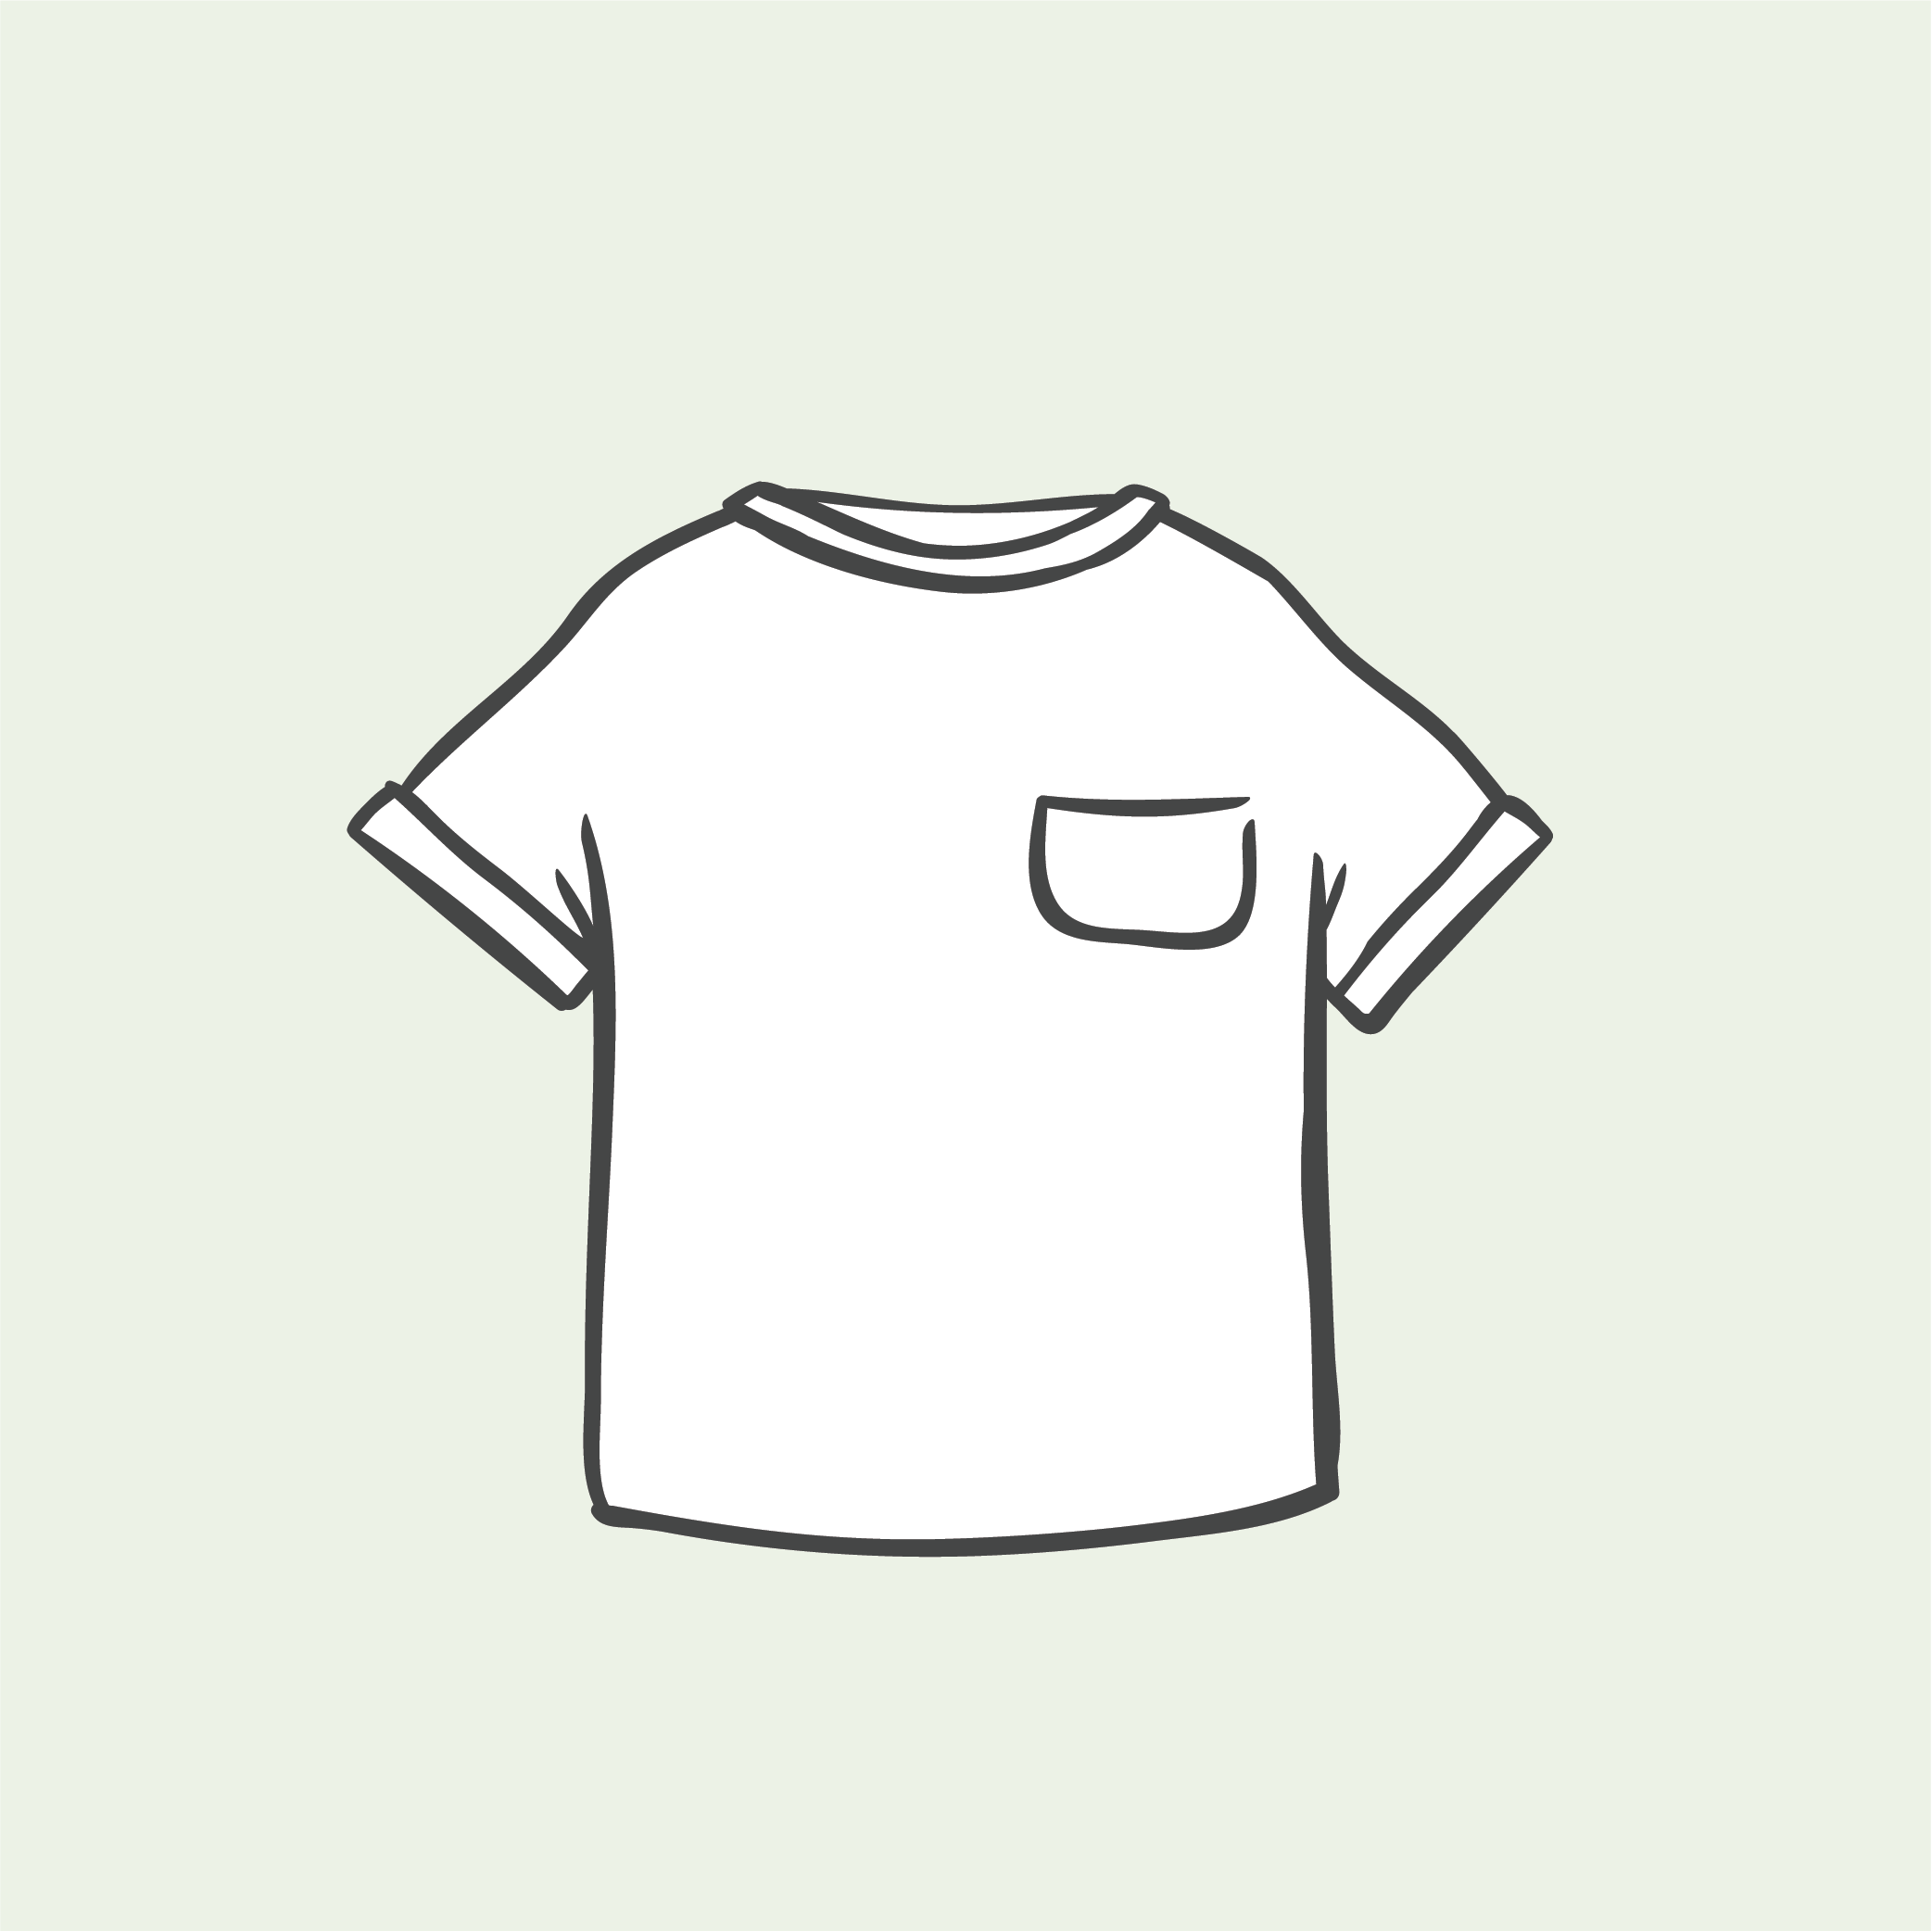 Illustration of a t-shirt